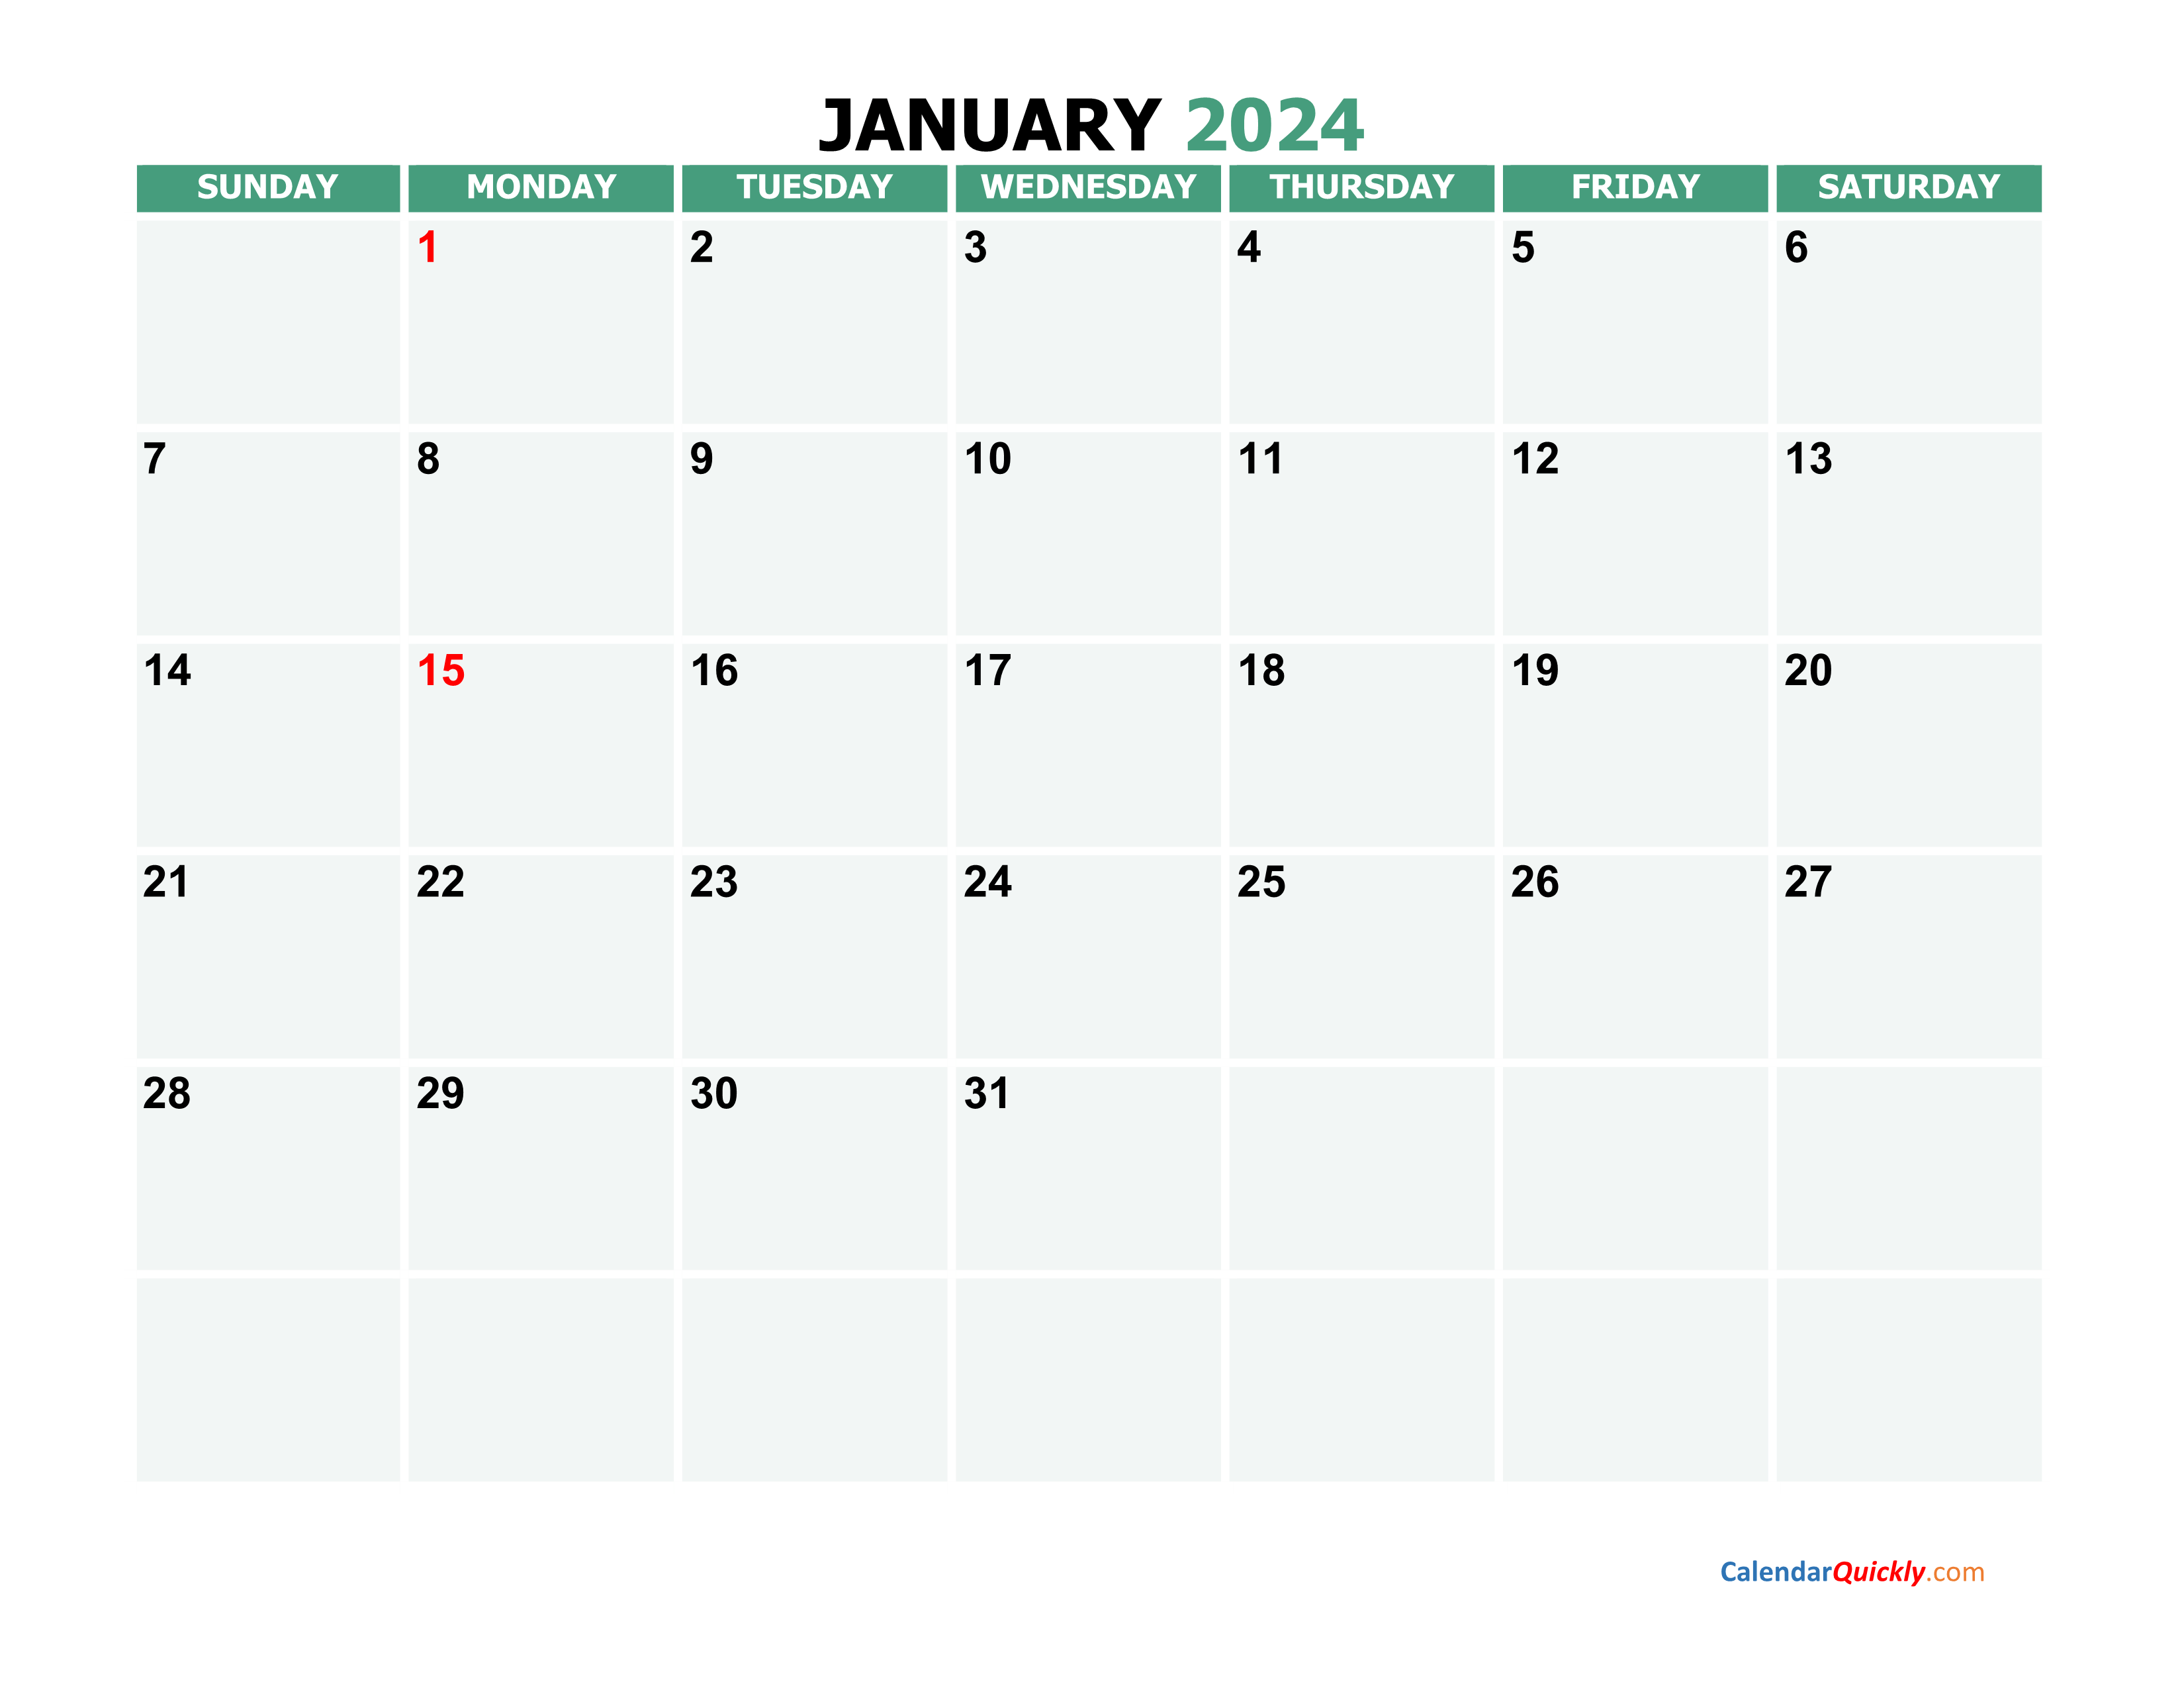 january 2024 calendar free printable calendar january 2024 calendar